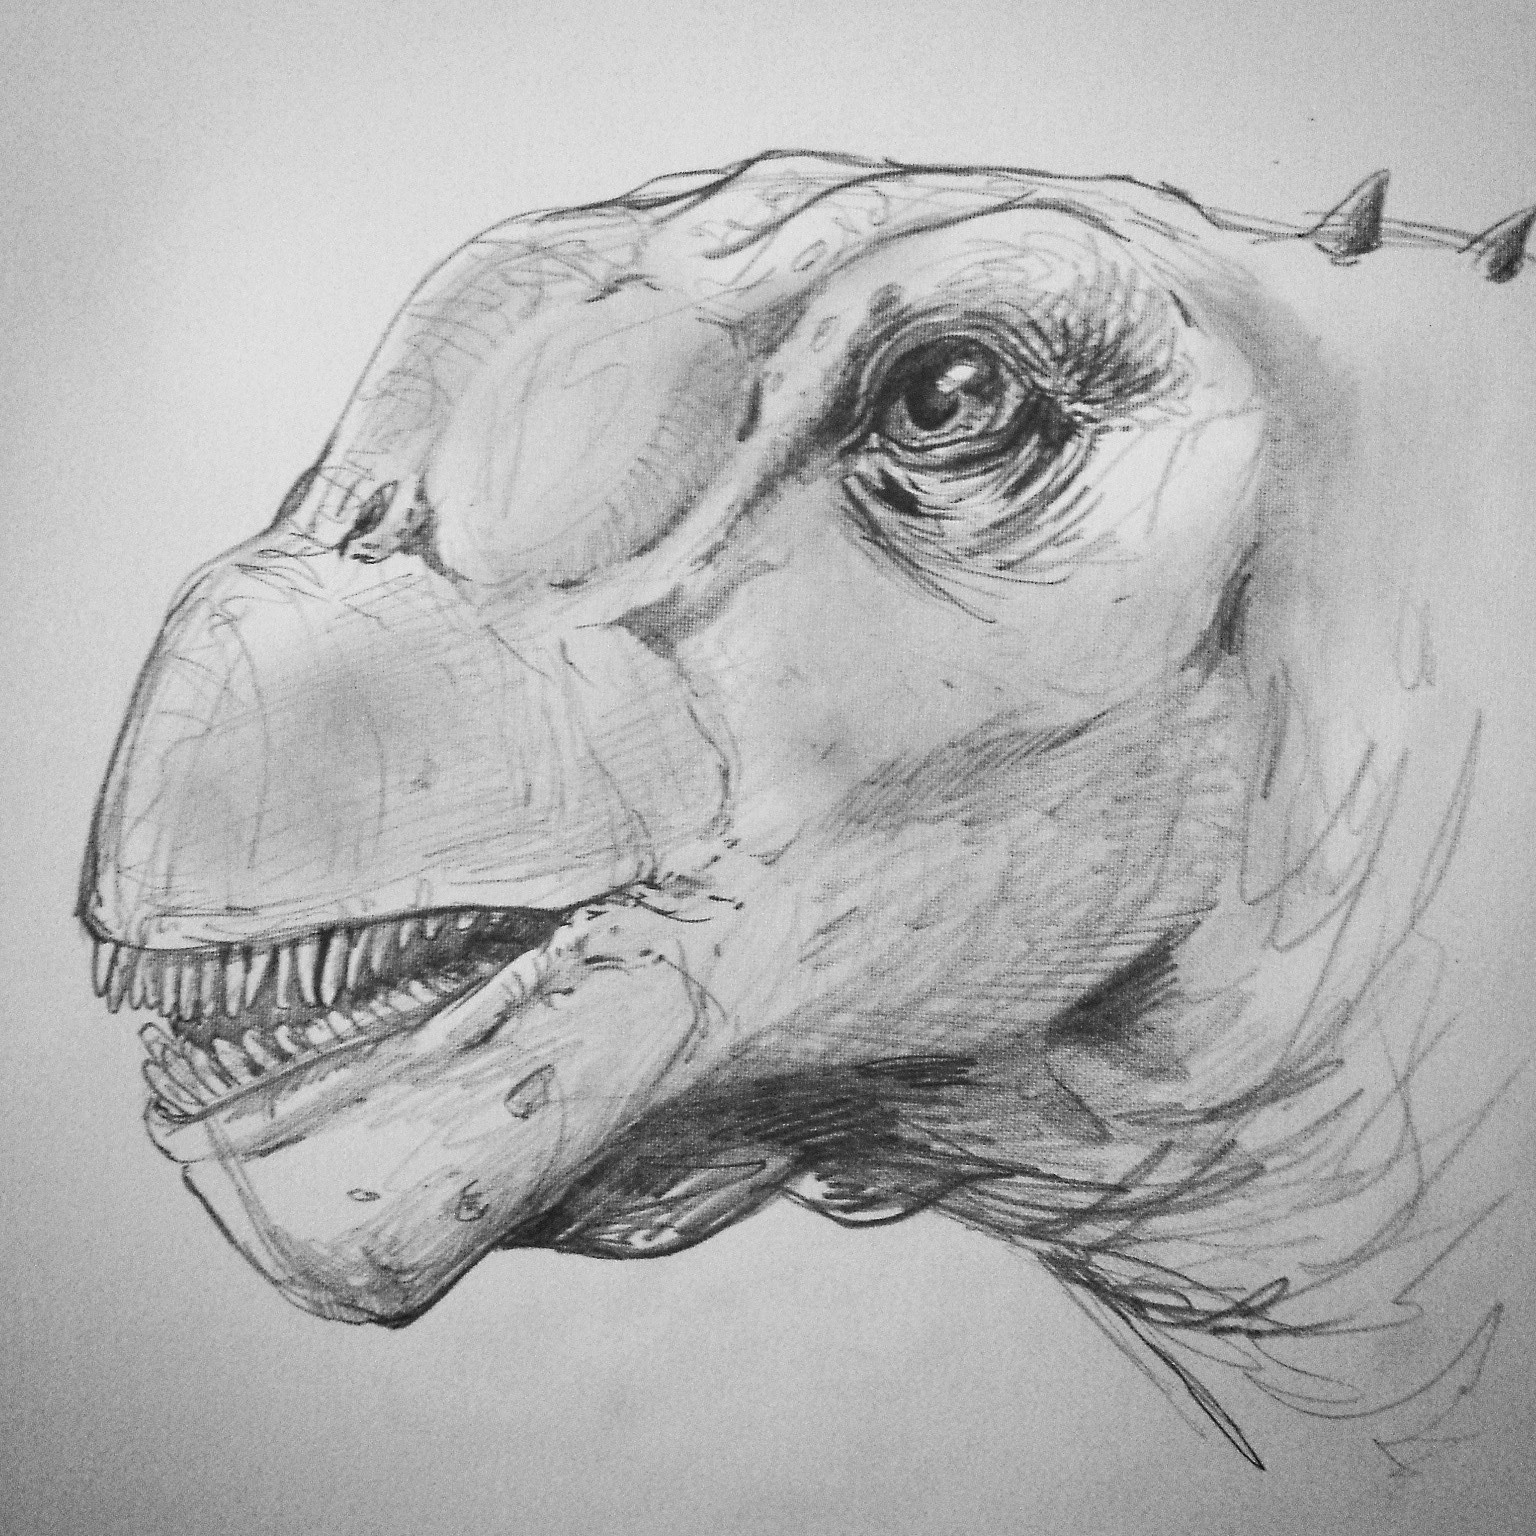 Camarasaurus

https://www.kickstarter.com/projects/868769538/primeval-kings-the-art-of-ken-kokoszka